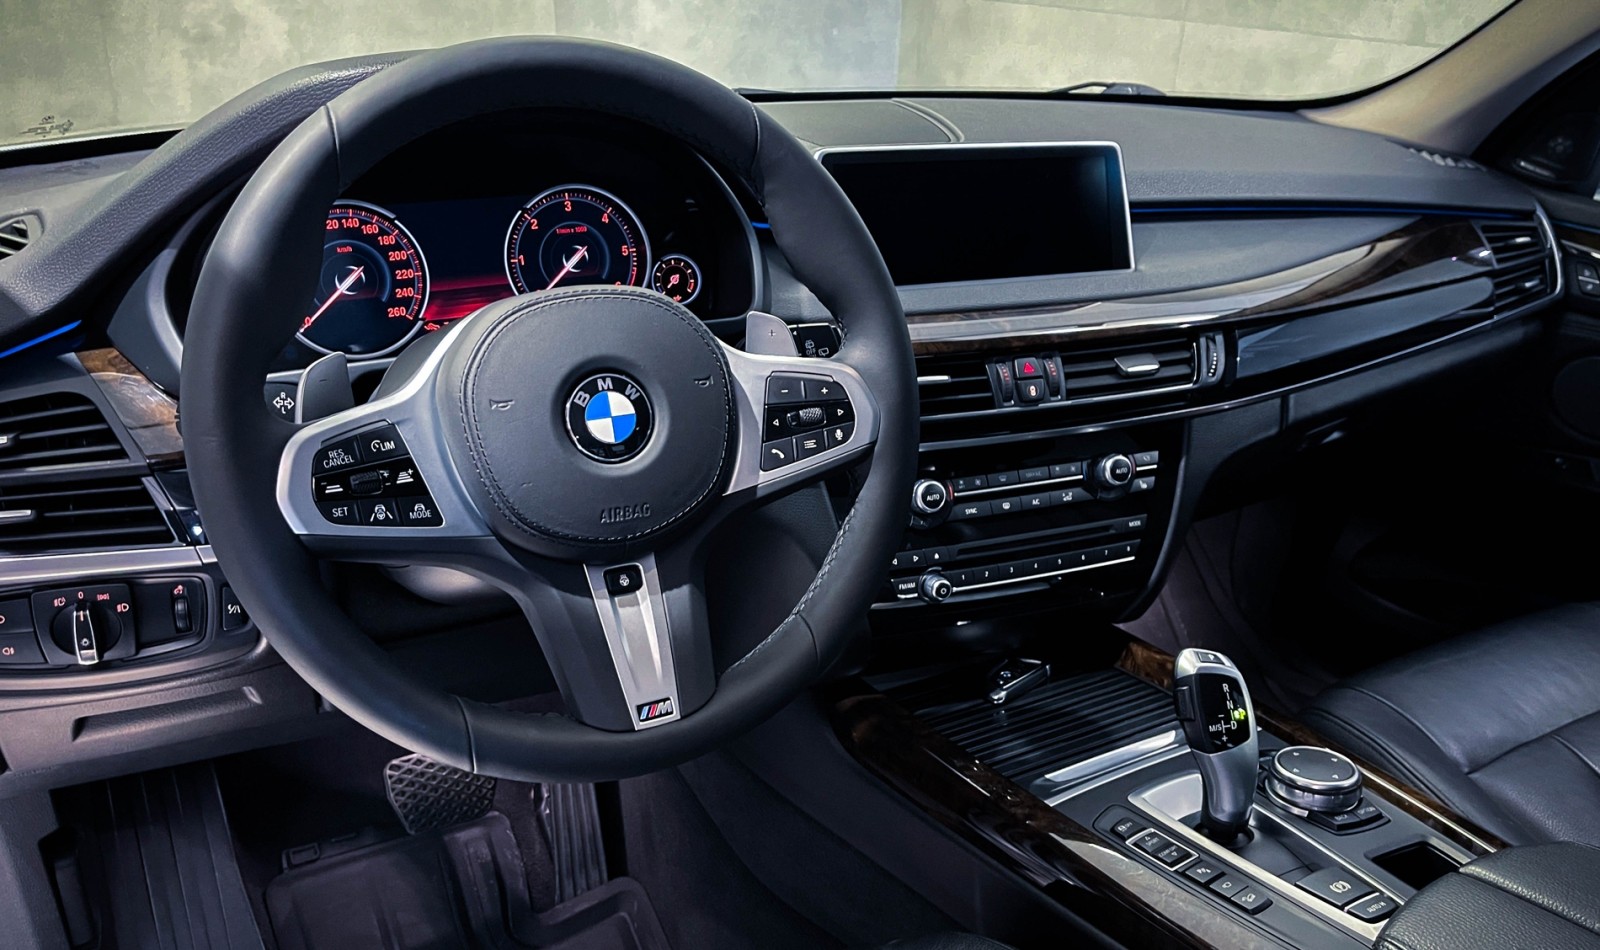 BMW Gxx Steering Wheel to Fxx Retrofit Adapter - CarSystems